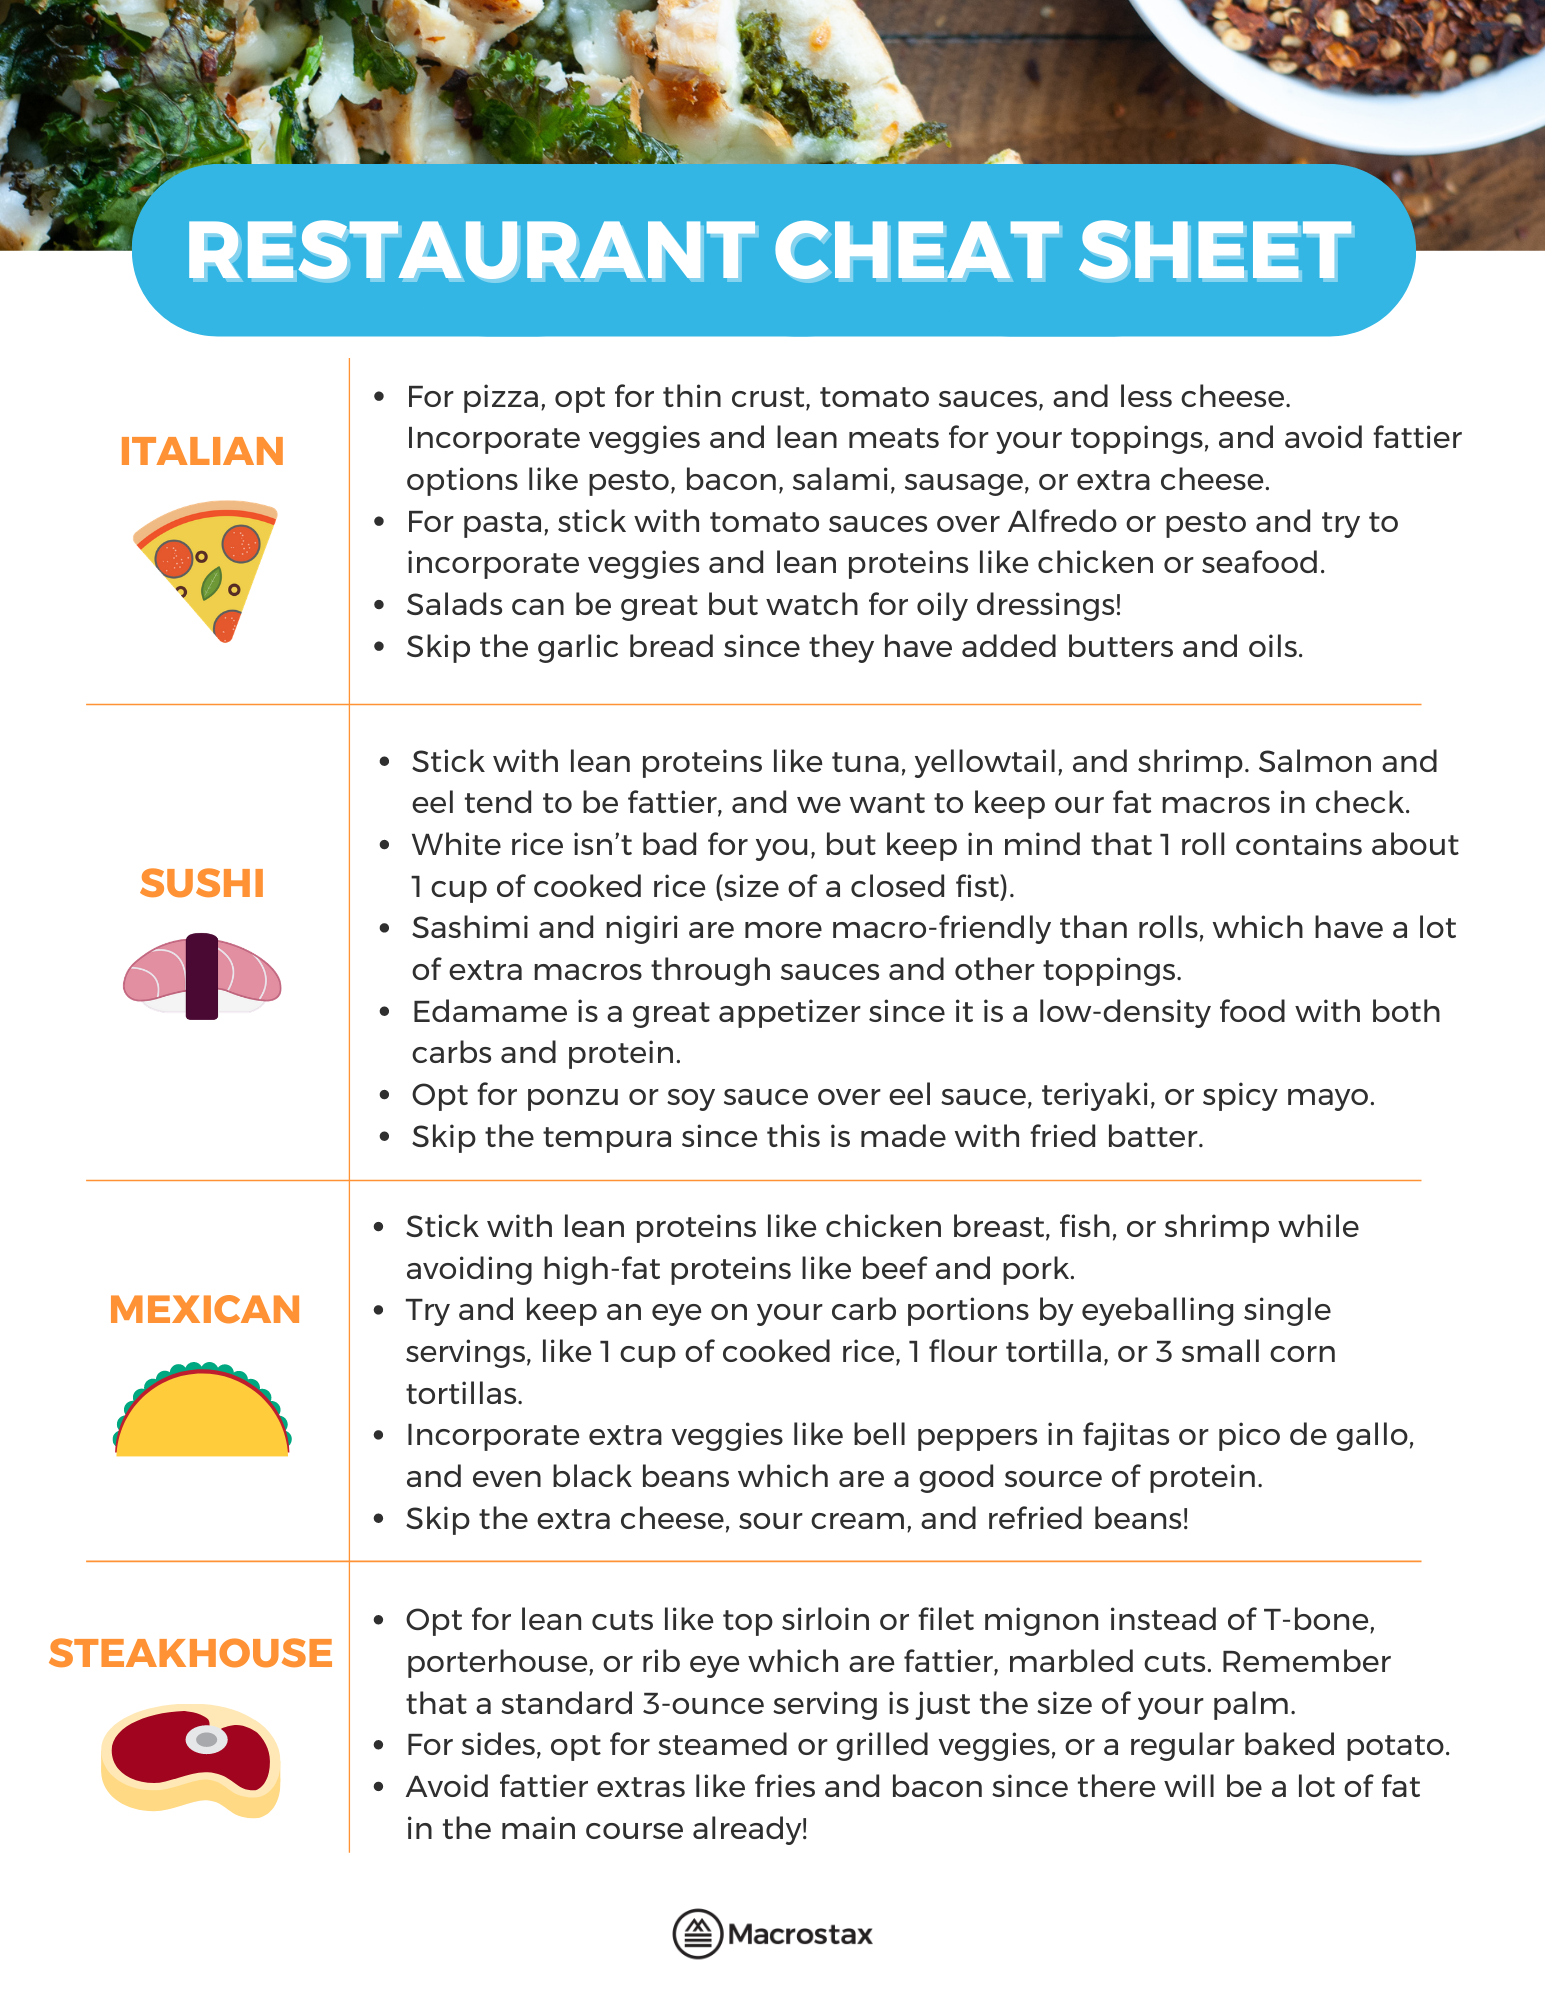 Macrostax Restaurant Cheat Sheet